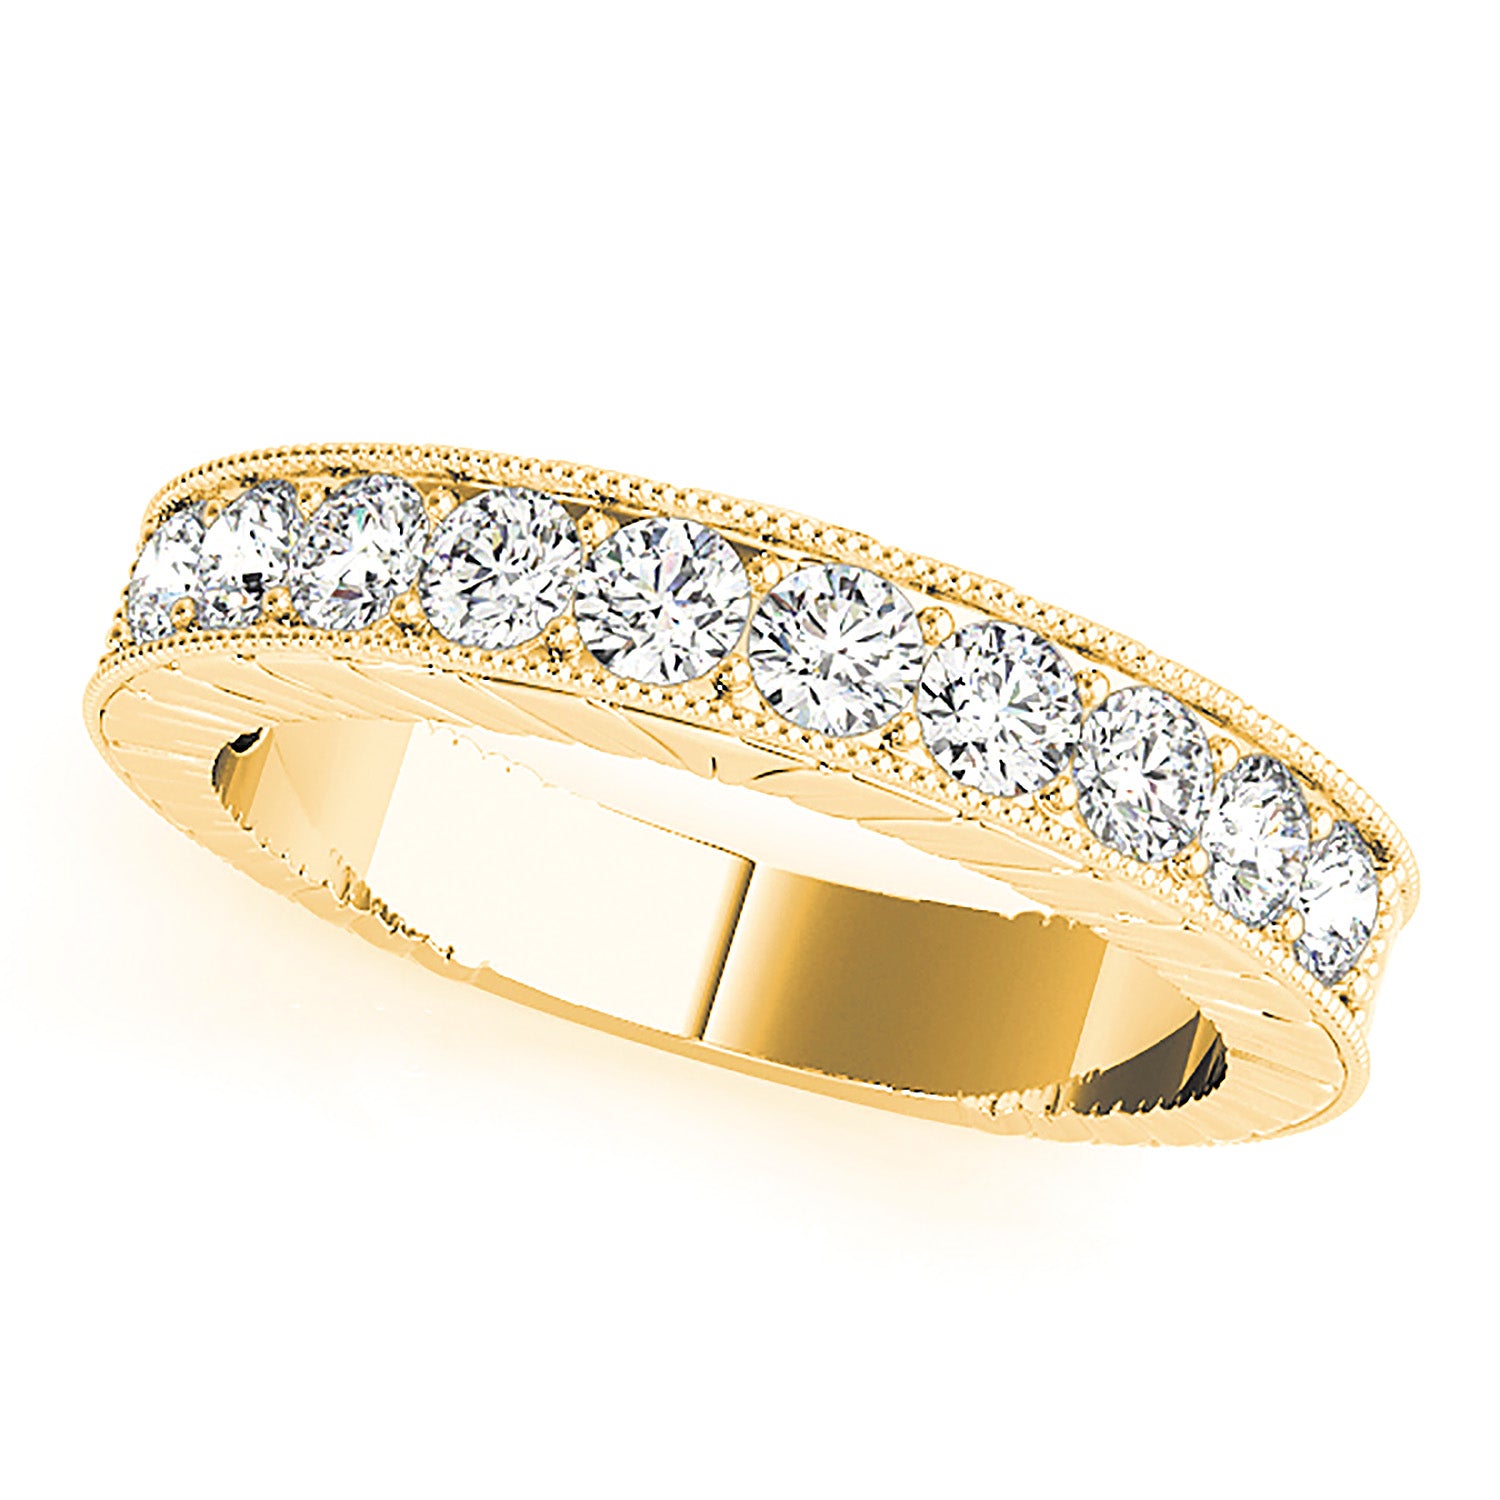 Diamond Wedding Band - 14K/18k Solid White Gold / Platinum | Channel Set Diamond Wedding Anniversary Ring | Modern Design-in 14K/18K White, Yellow, Rose Gold and Platinum - Christmas Jewelry Gift -VIRABYANI